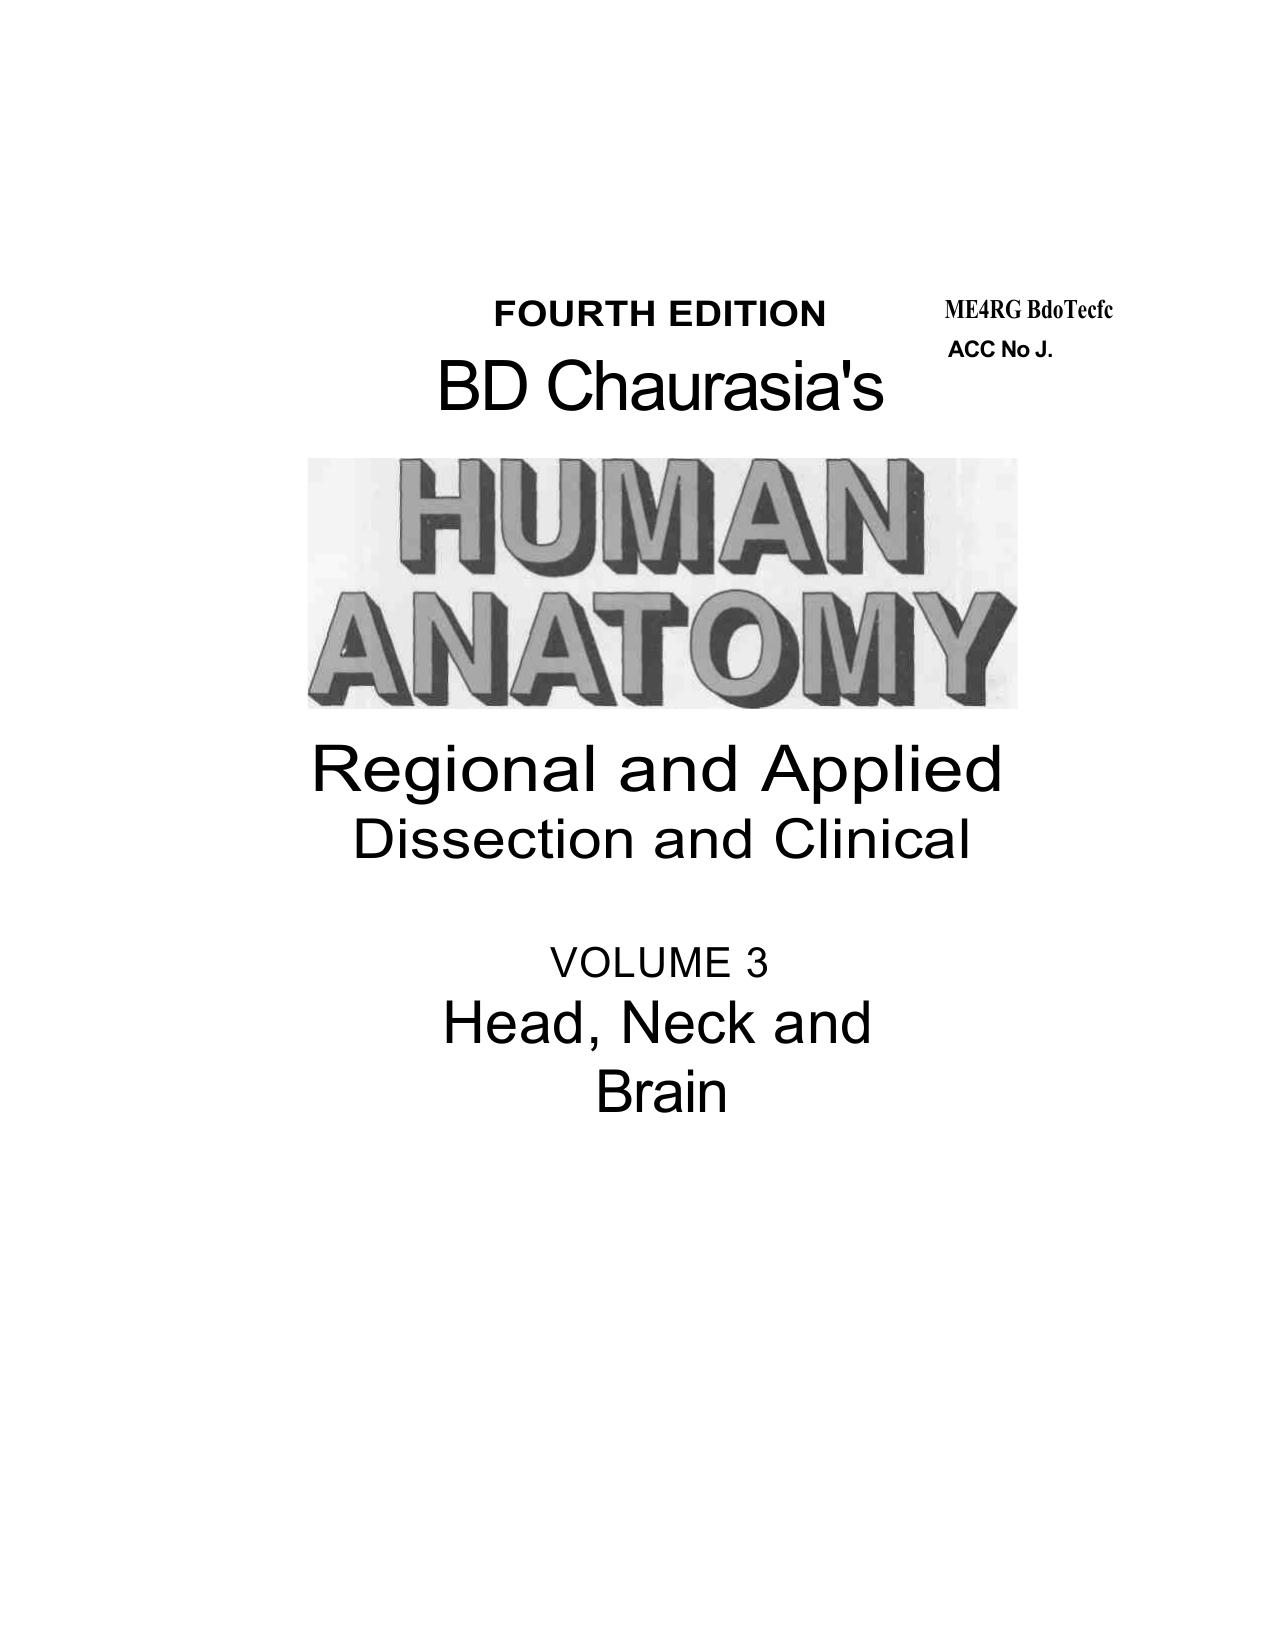 BD Chaurasia’s Human Anatomy